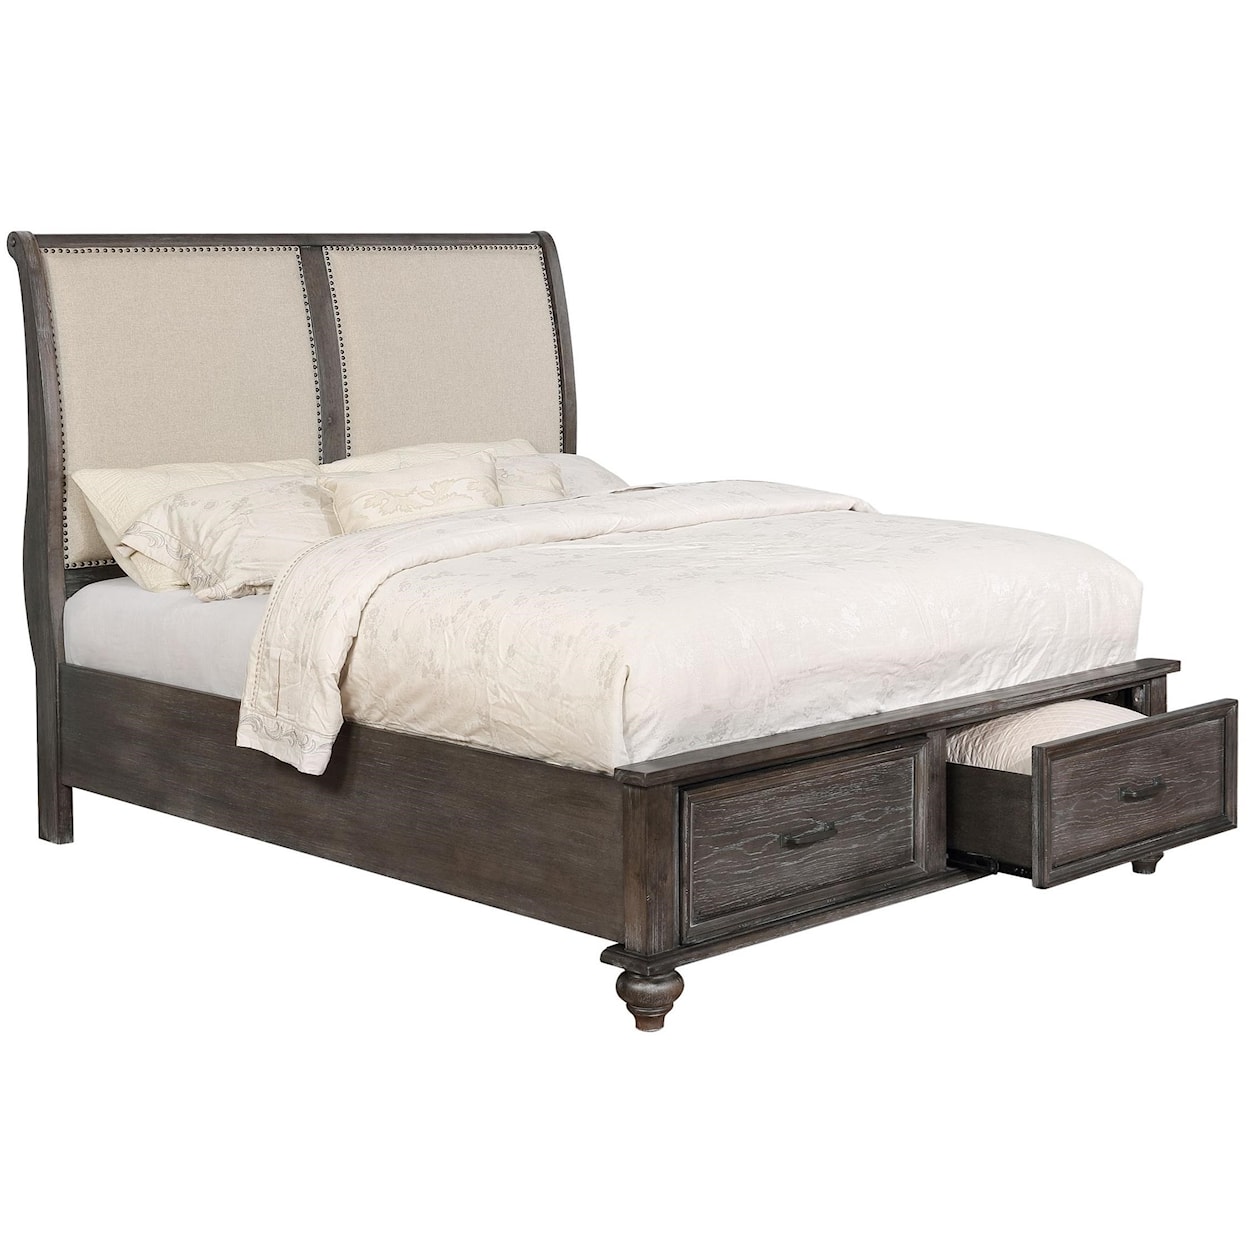 Avalon Furniture B1600 Upholstered King Bed